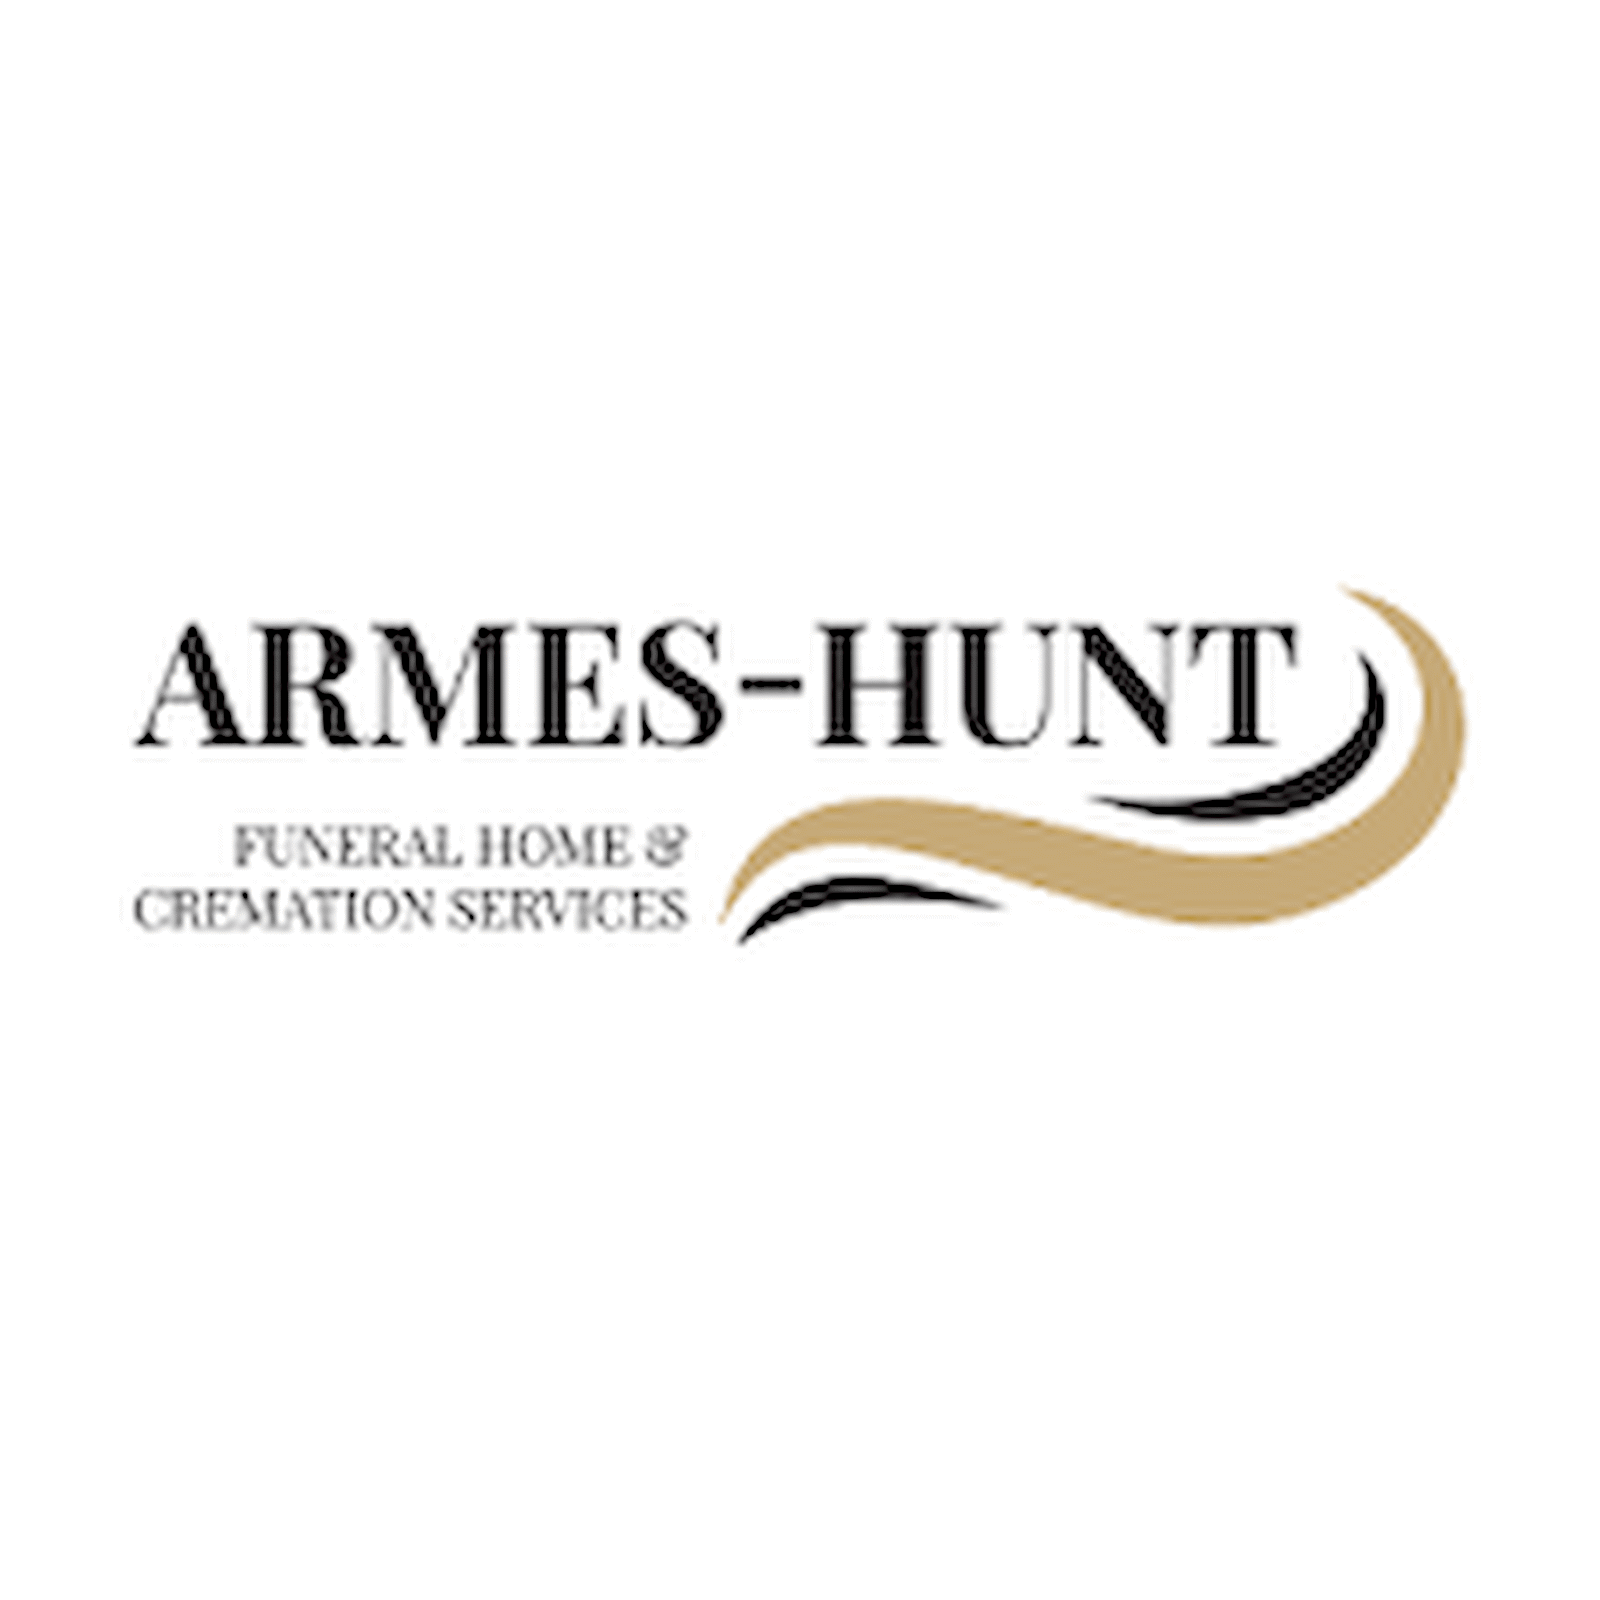 Armes-Hunt Funeral Home